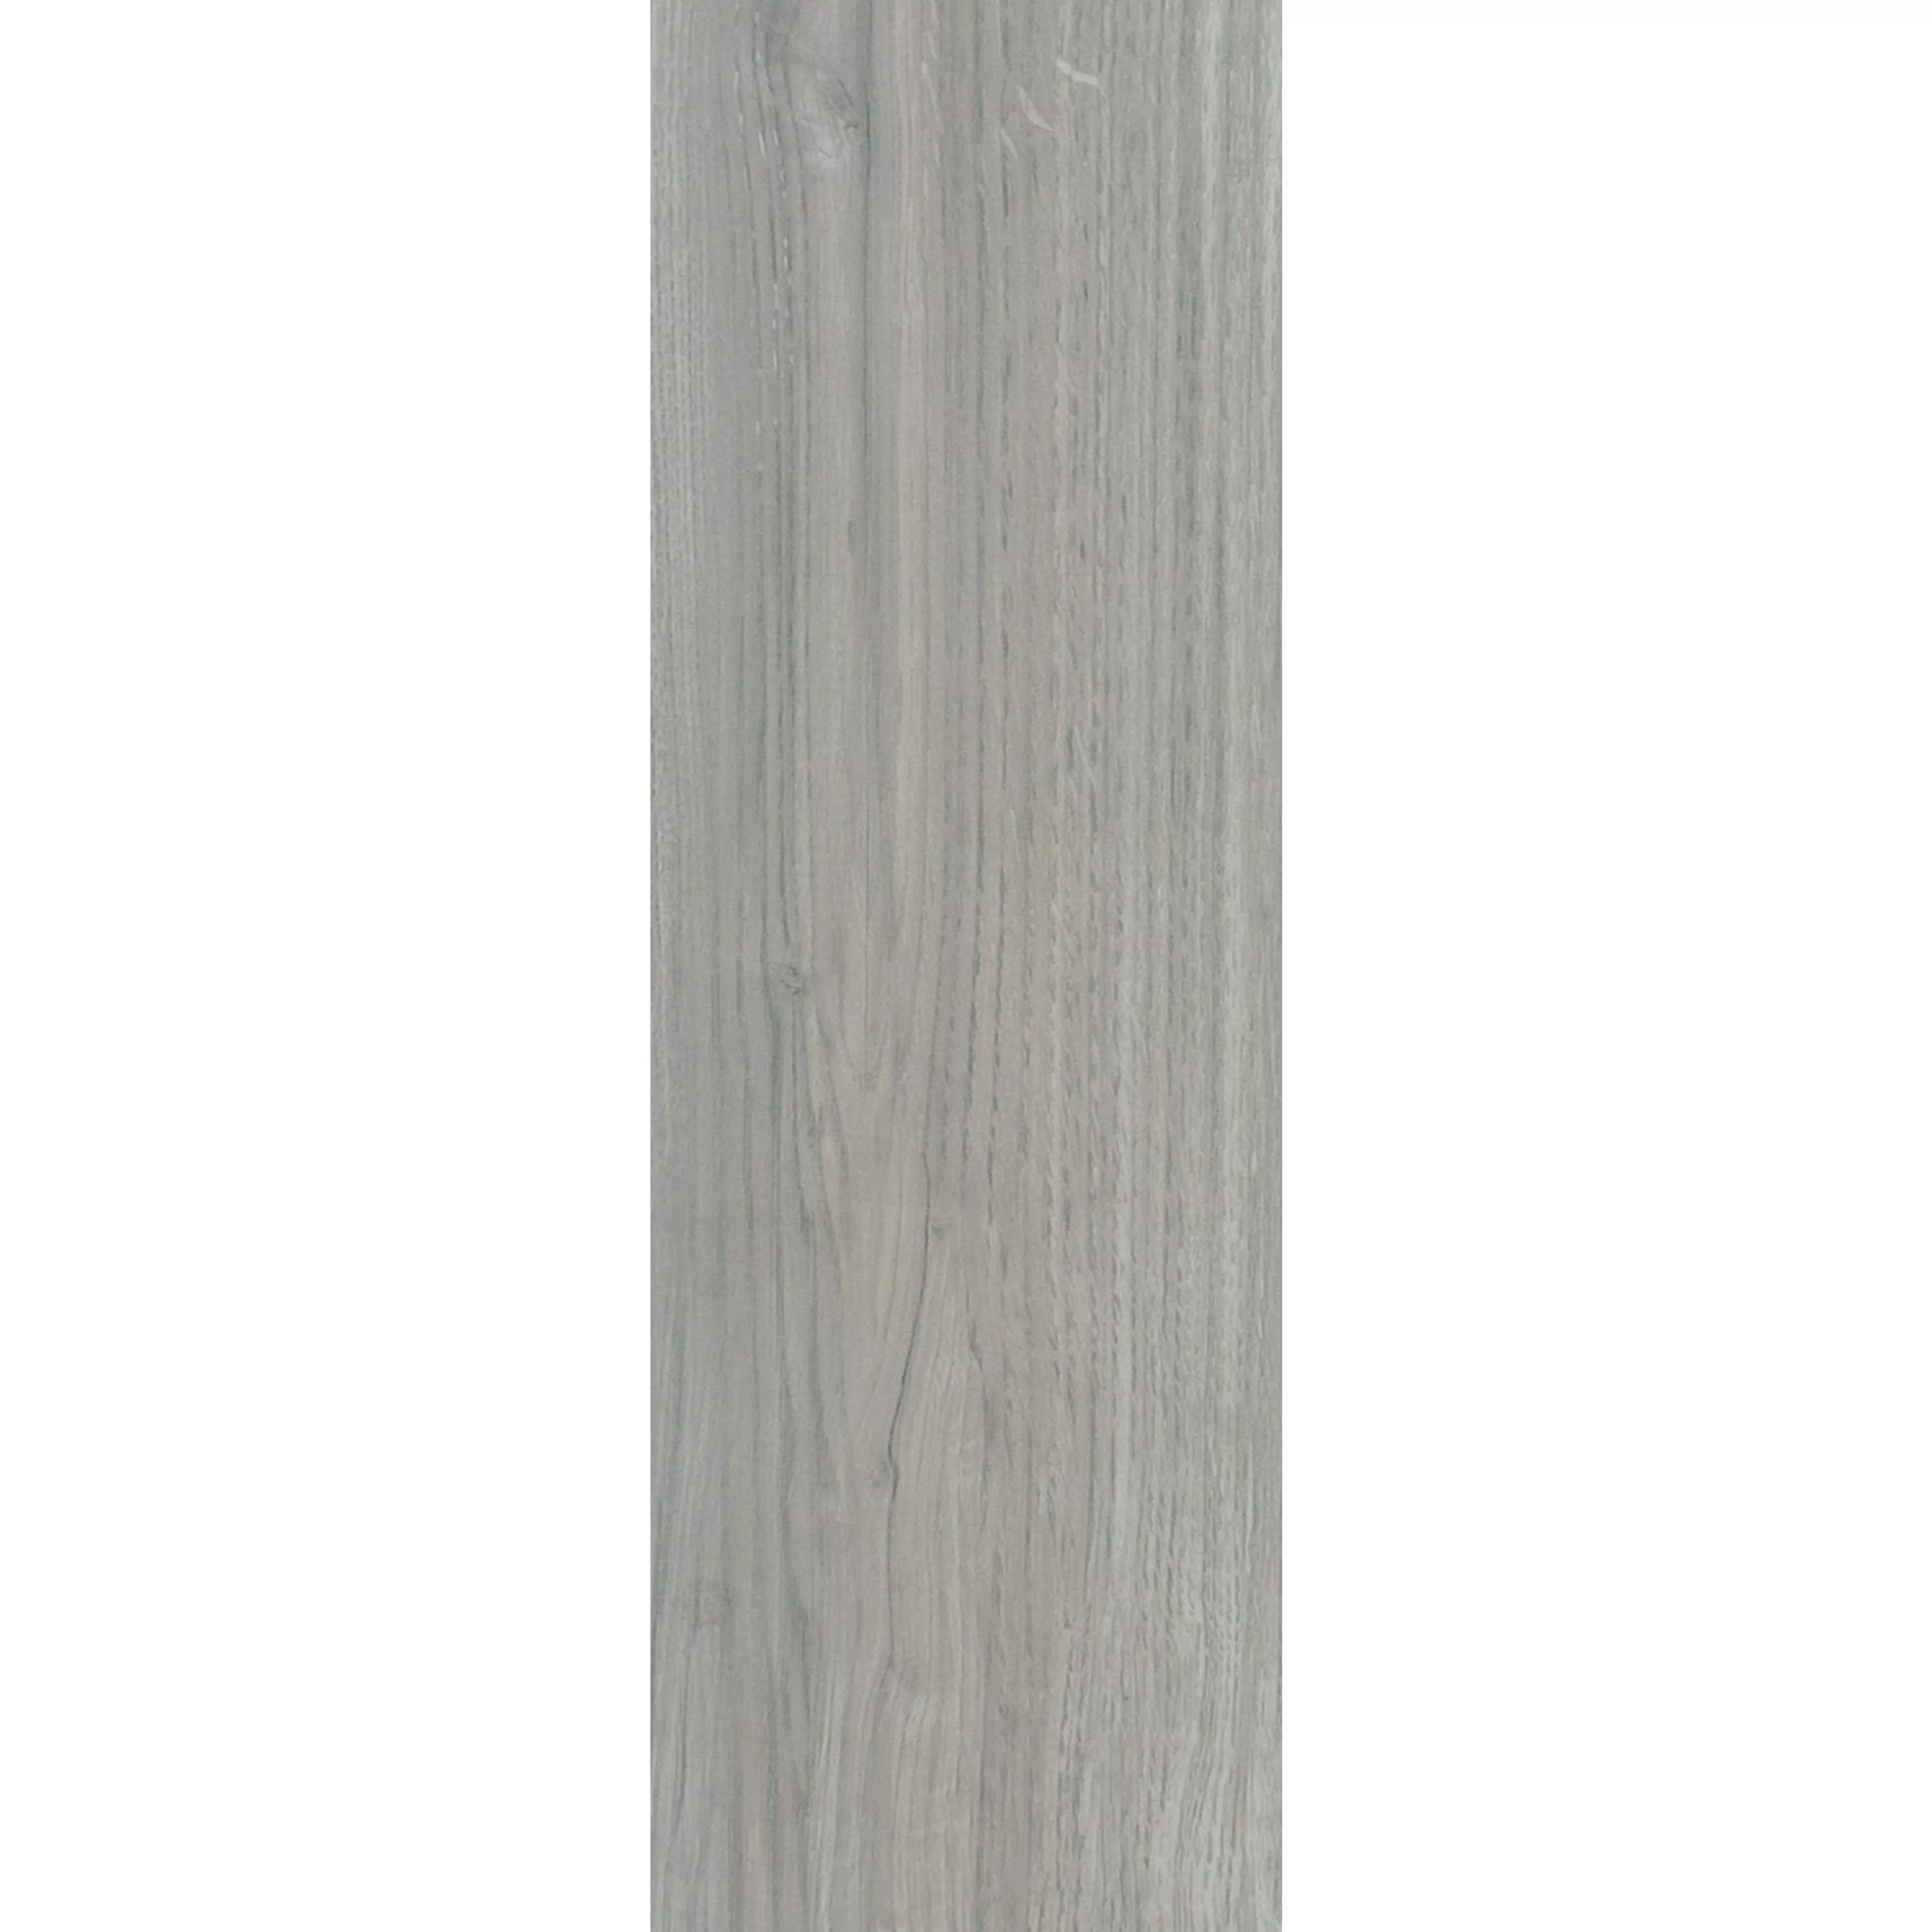 Lattialaatat Puinen Ilme Fullwood Beige 20x120cm 